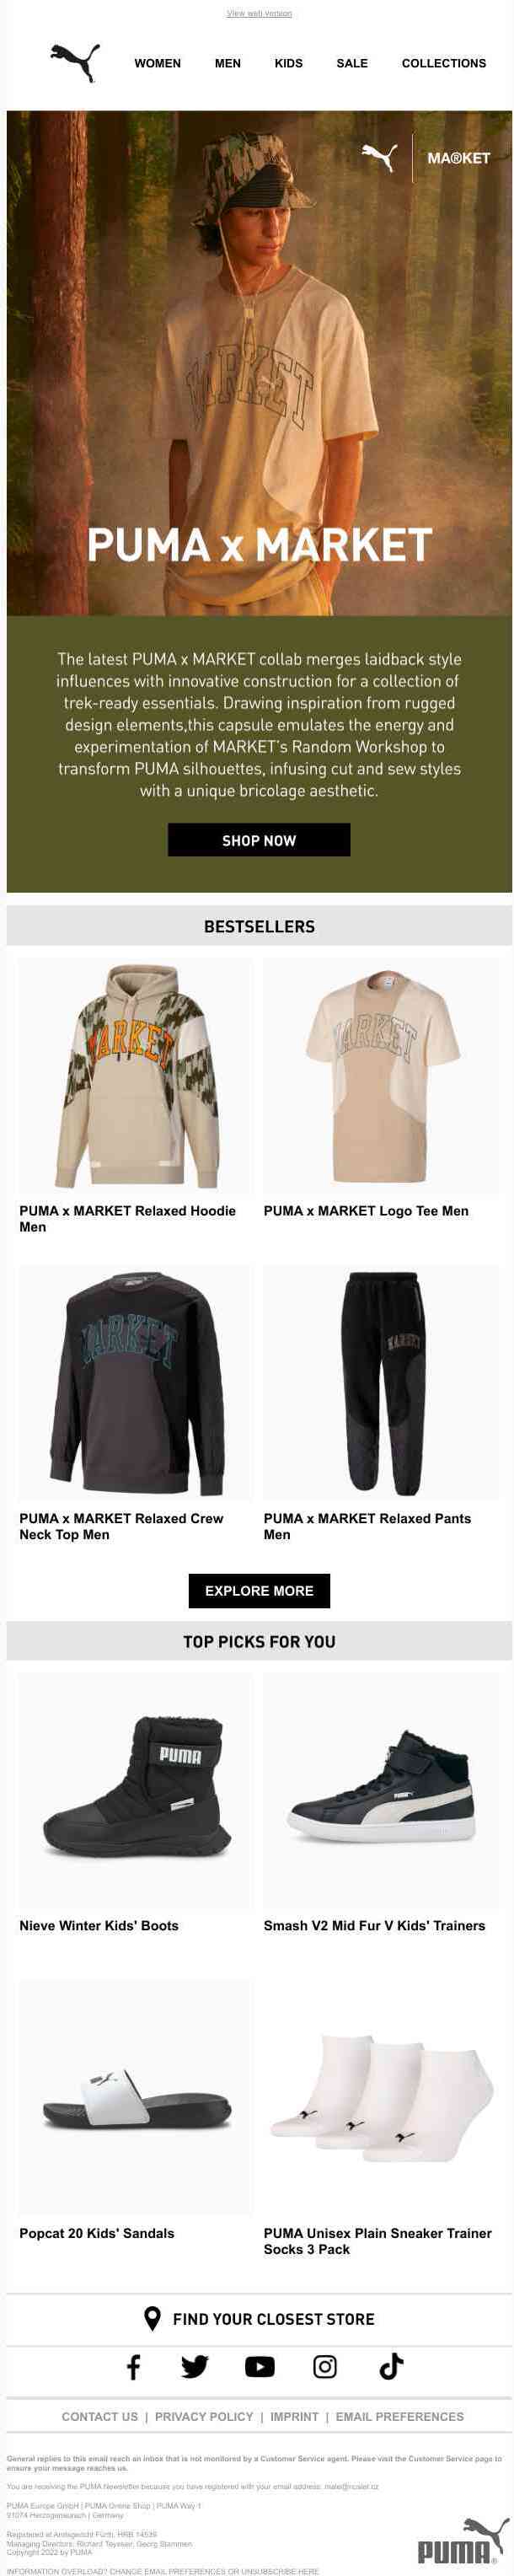 Introducing PUMA x Market